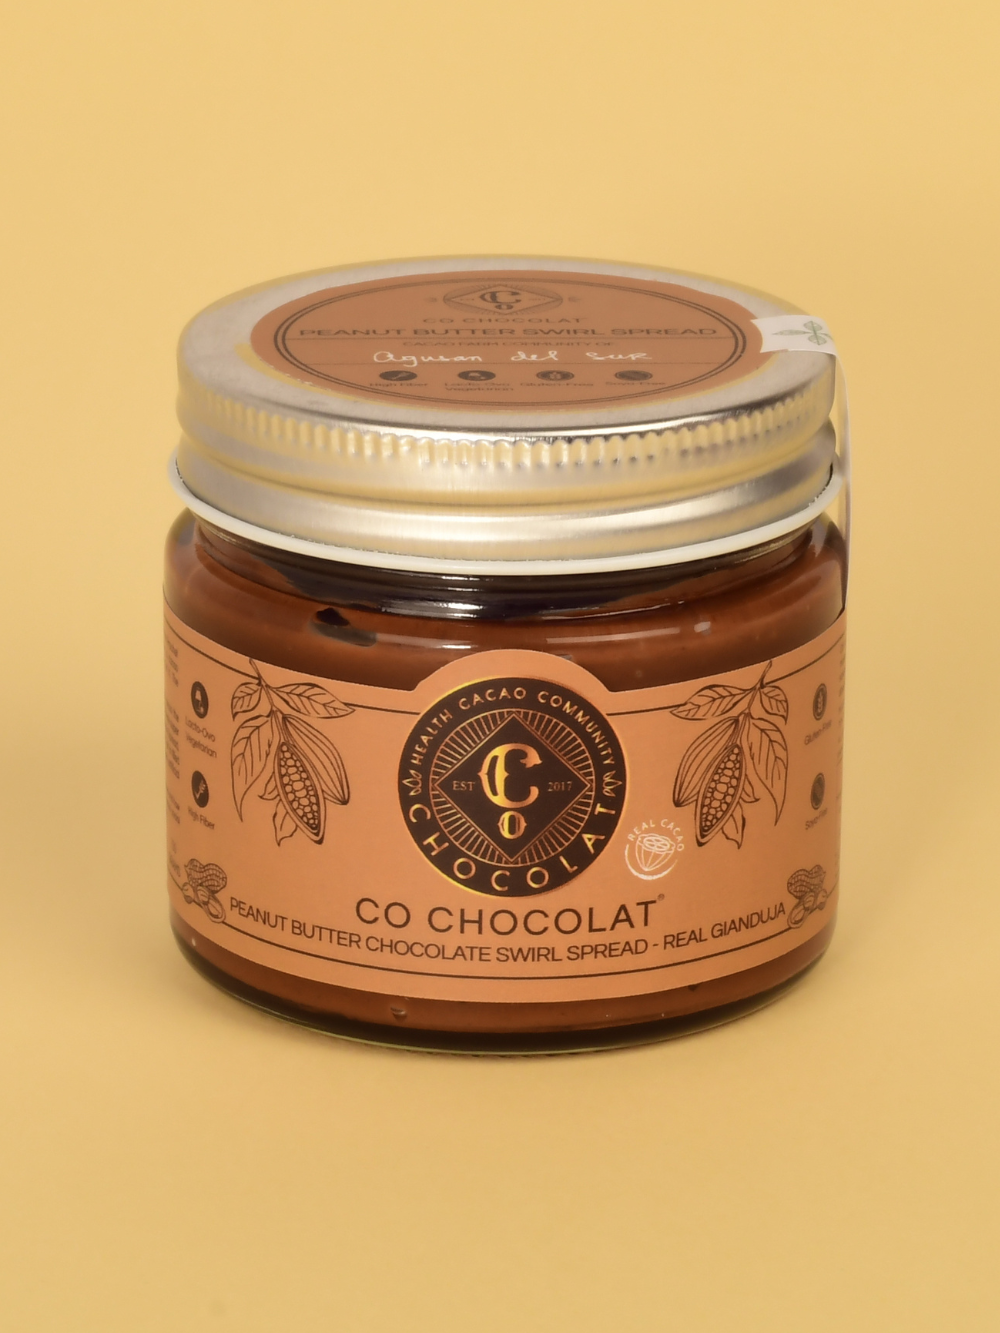 Co Chocolat Peanut Butter Chocolate Swirl Gianduja Spread 150g